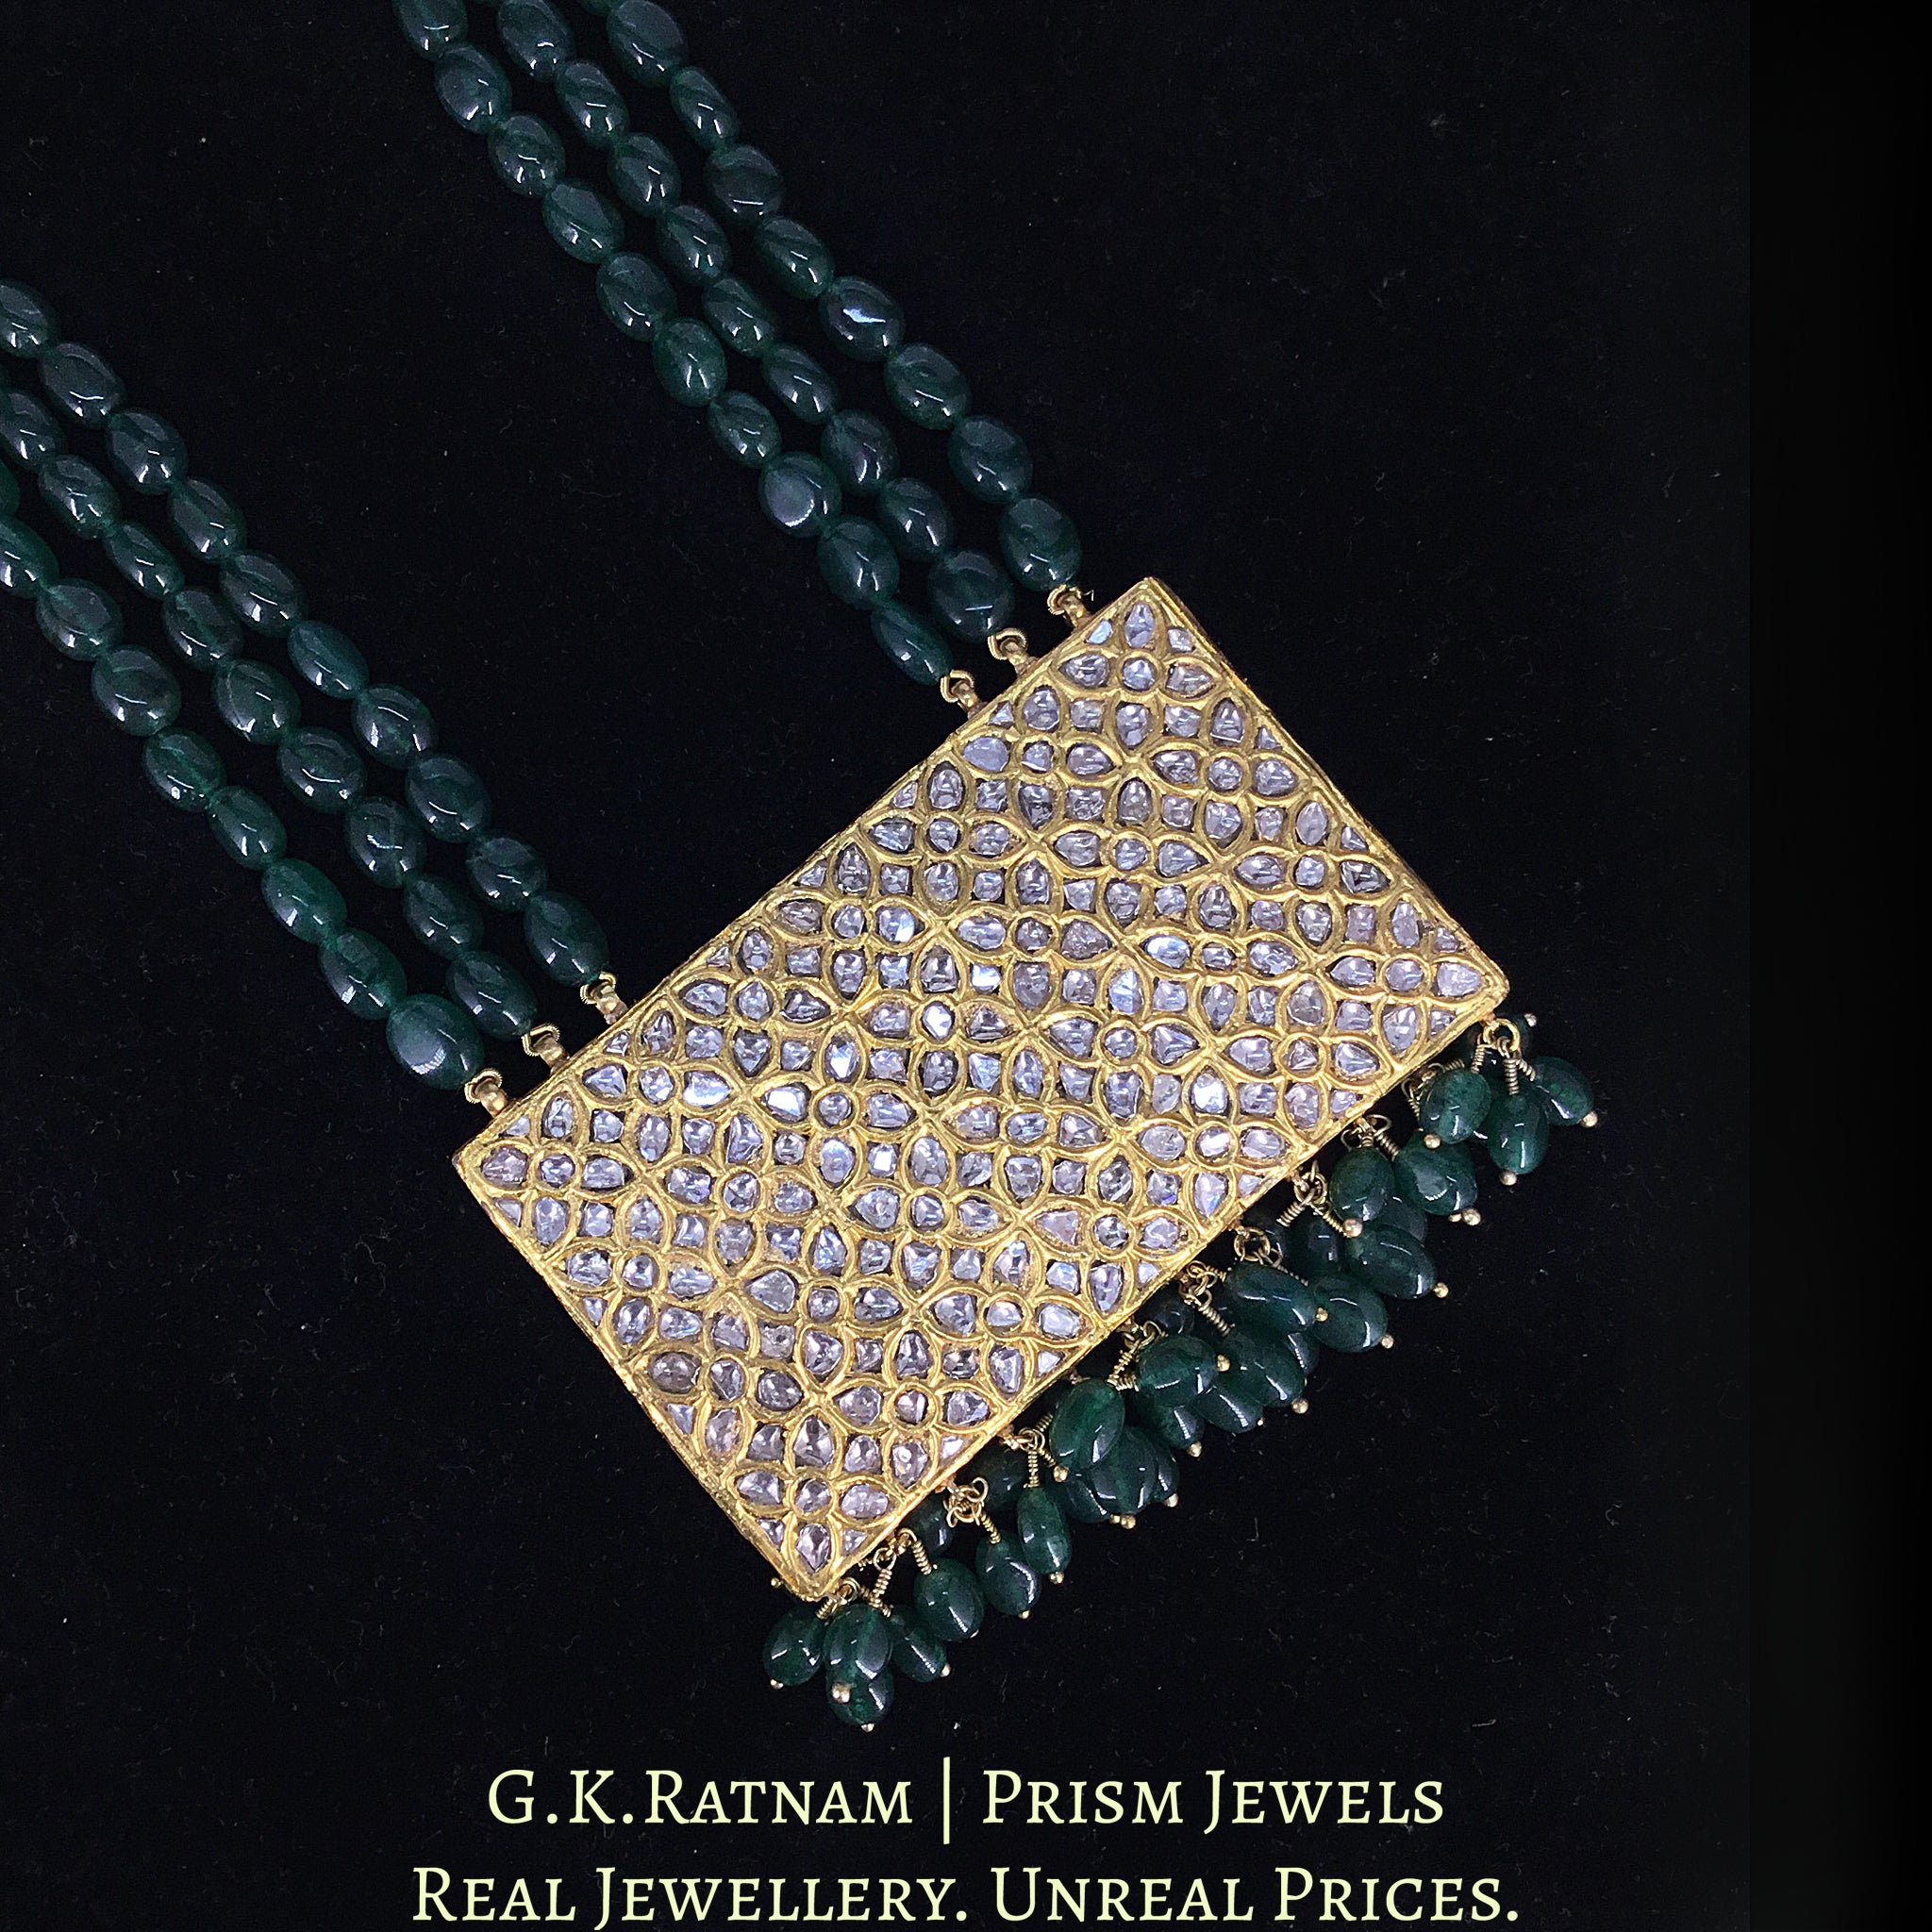 23k Gold and Diamond Polki Rectangle Pendant enhanced with emerald-grade Green Beryls